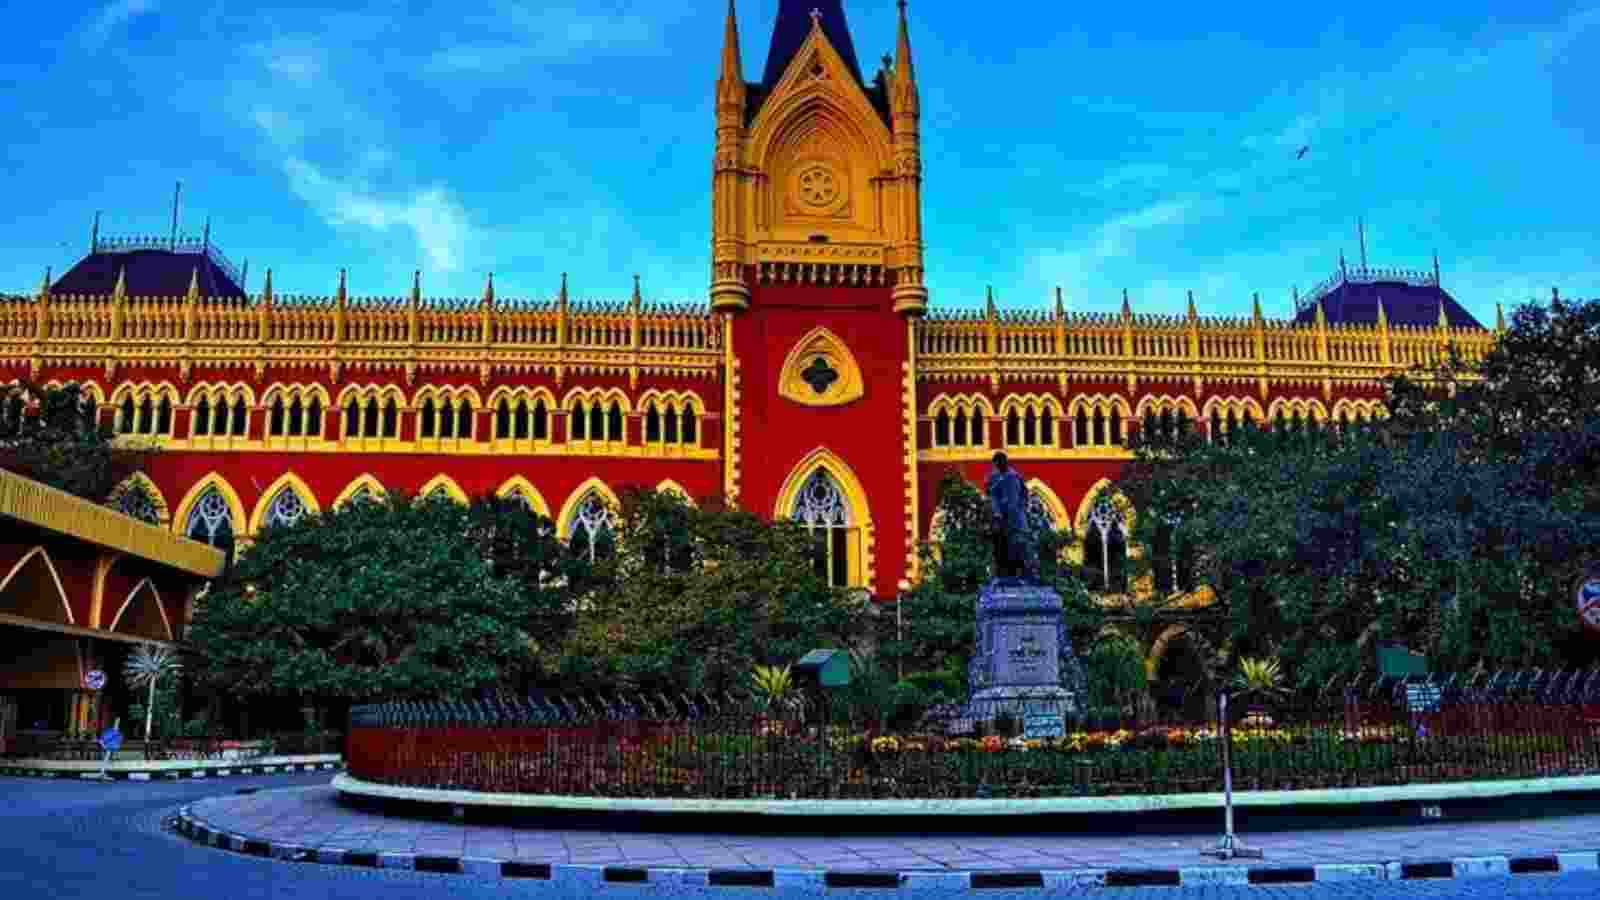 PIL Against Ragging: PIL filed in Calcutta high court regarding ragging in educational institutions